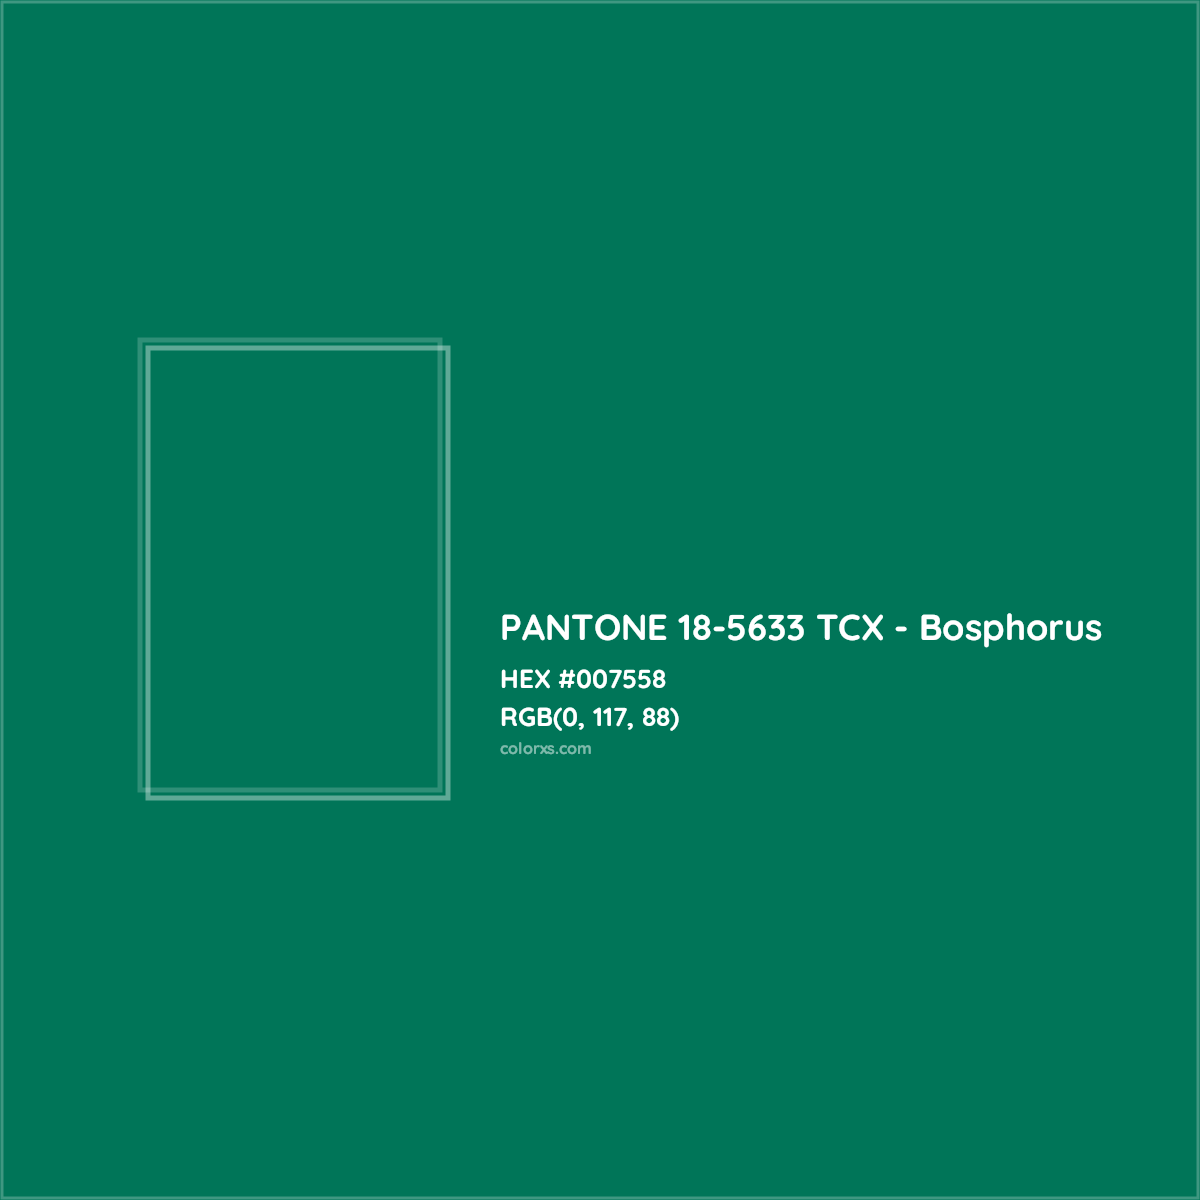 HEX #007558 PANTONE 18-5633 TCX - Bosphorus CMS Pantone TCX - Color Code